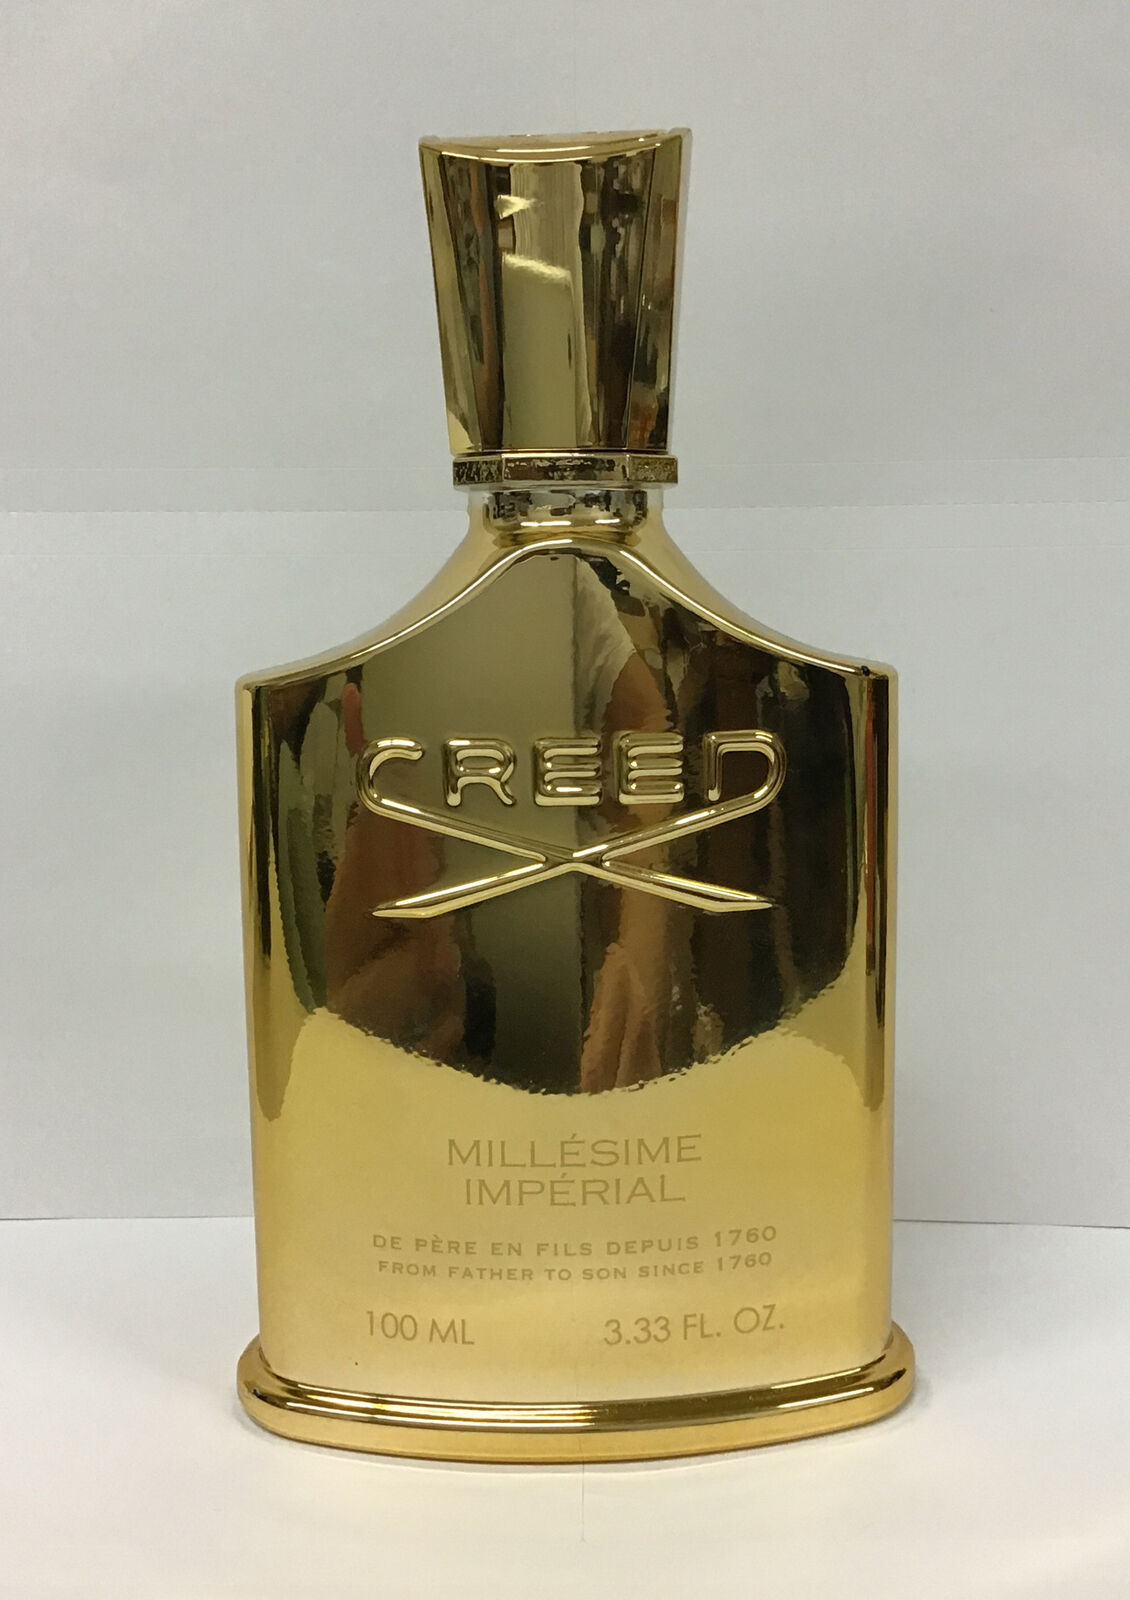 Creed Millesime Imperial Eau De Parfum Spray 3.33 Fl Oz, As Pictured.